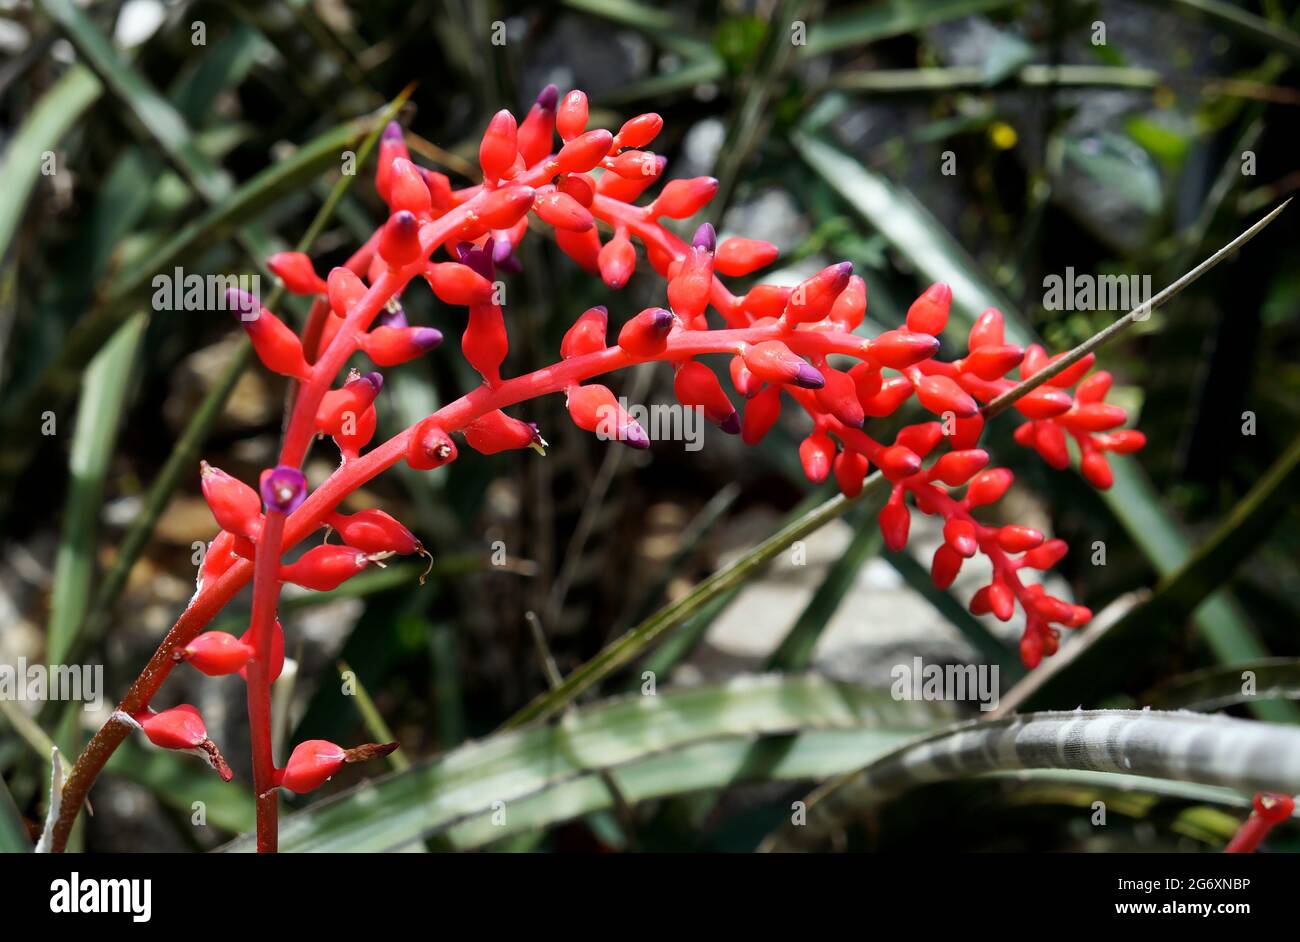 Red bromeliad flowers and buds, Rio, Brazil Stock Photo